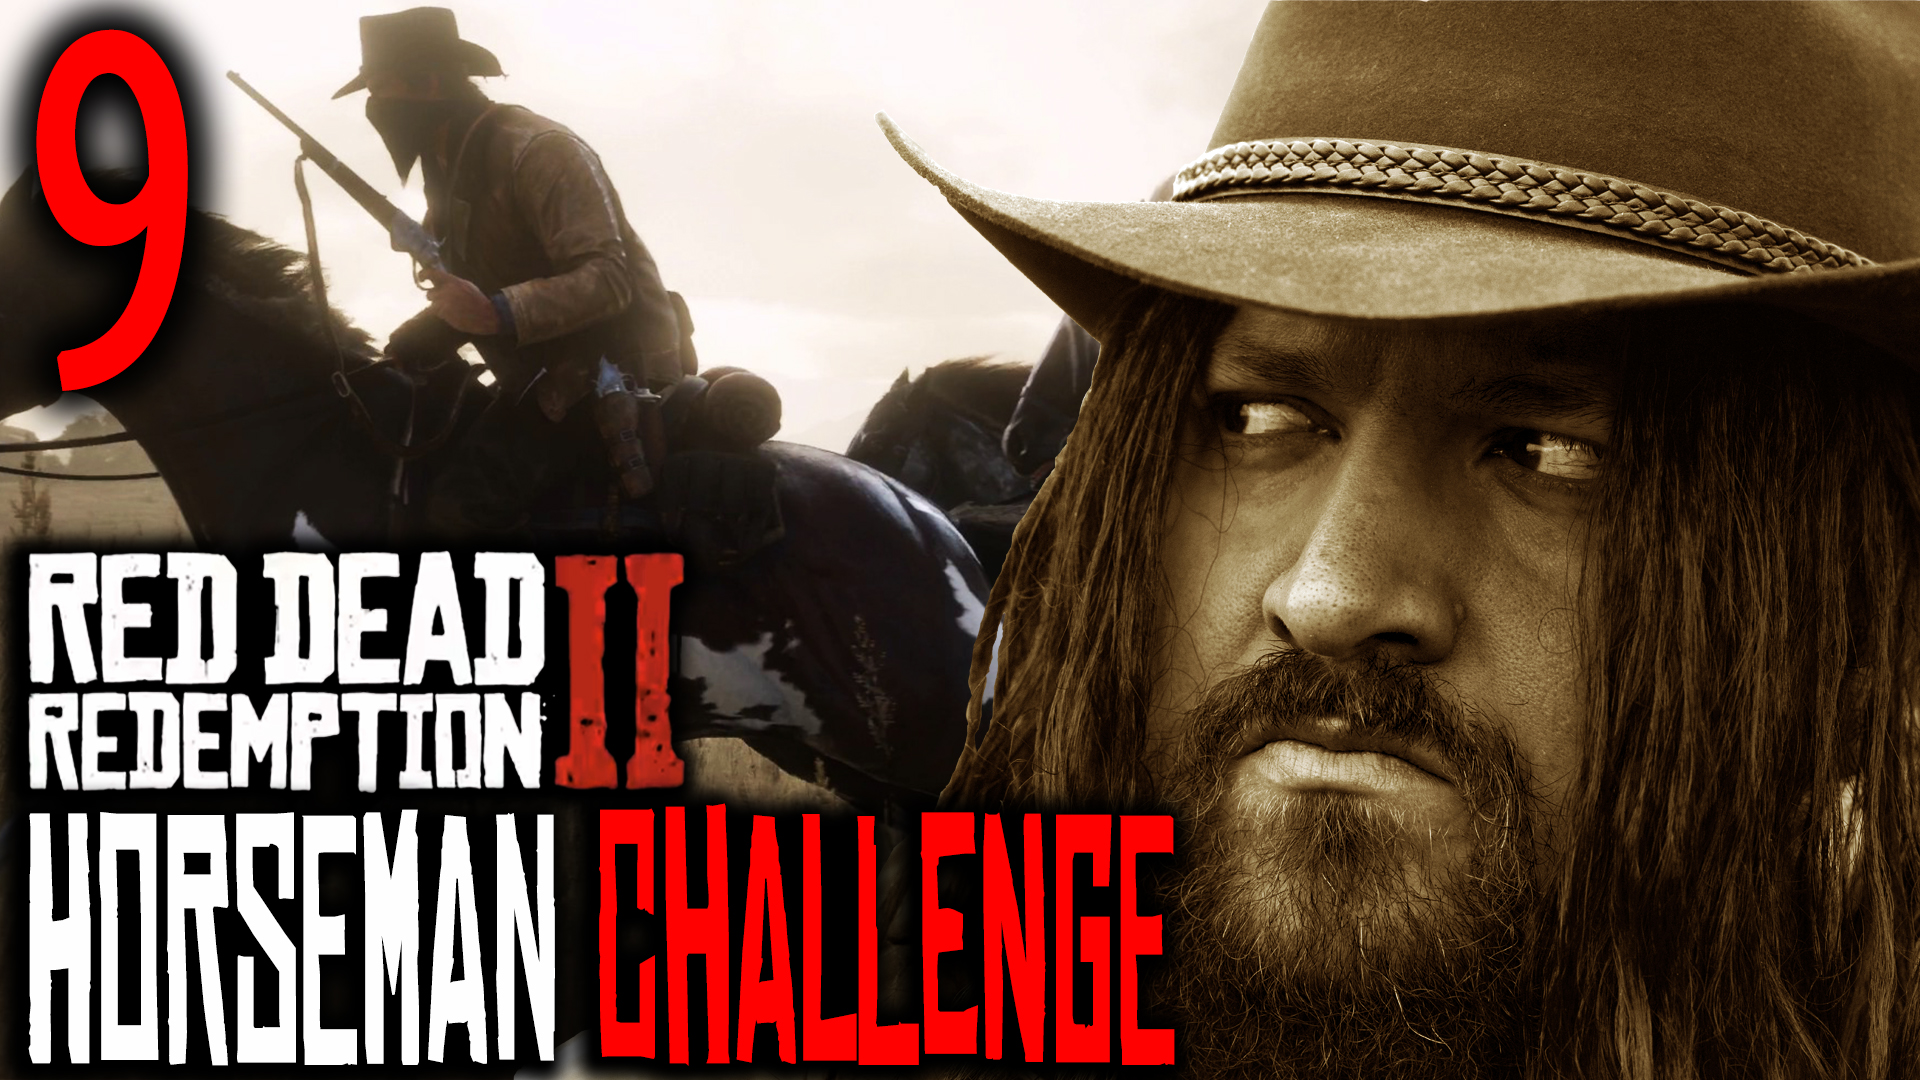 Red Dead Redemption 2: Horseman Challenge 9 - EASY Guide